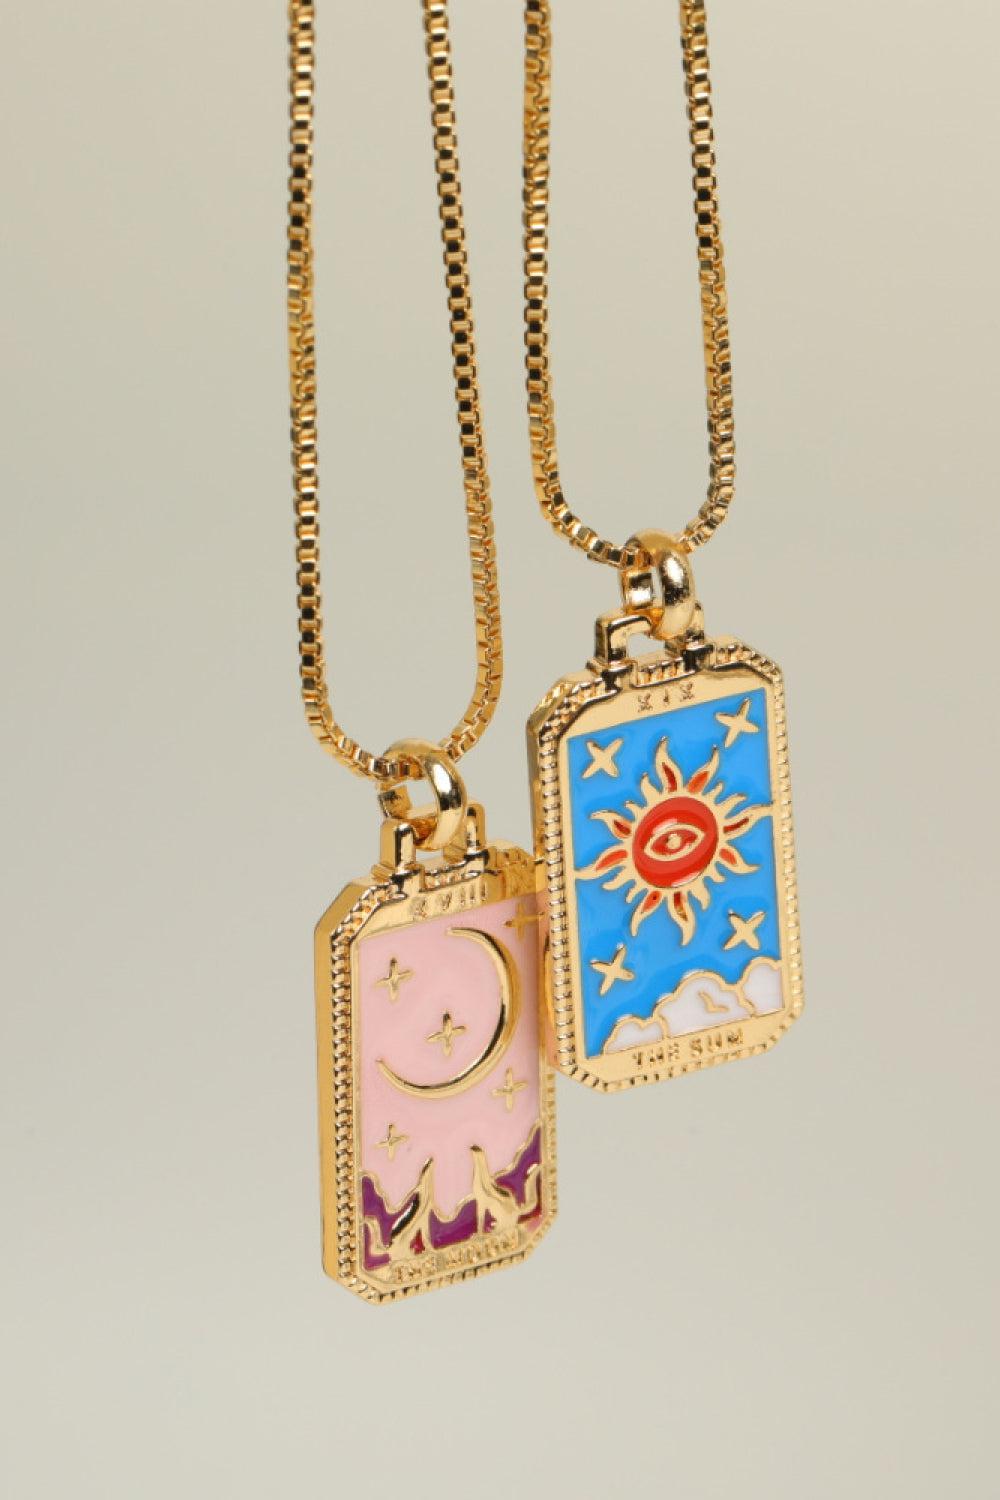 Tarot Card Pendant Copper Necklace BLUE ZONE PLANET